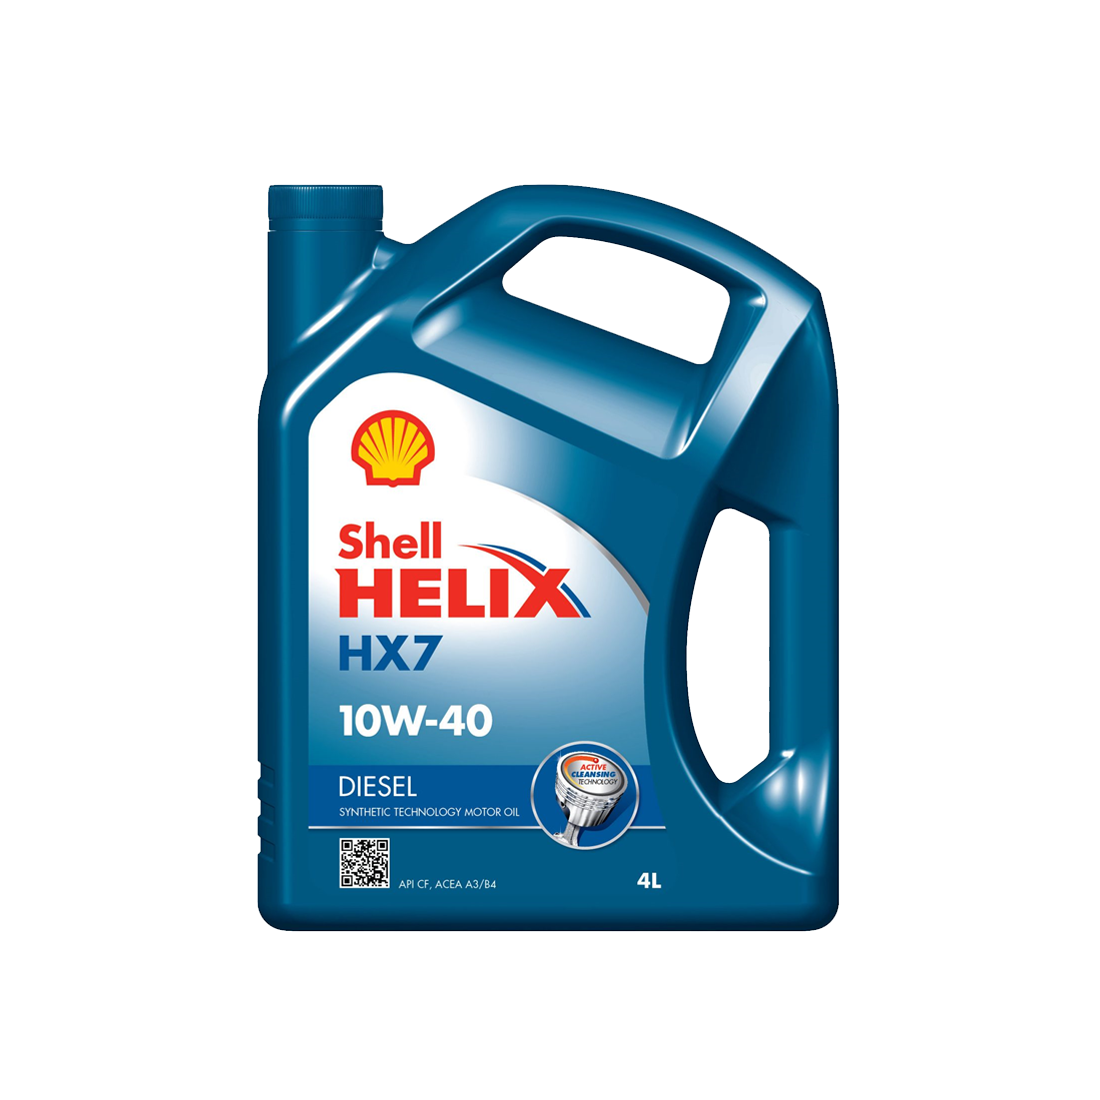 Delsyntetiskolja Shell Helix HX7 10W-40, 4L